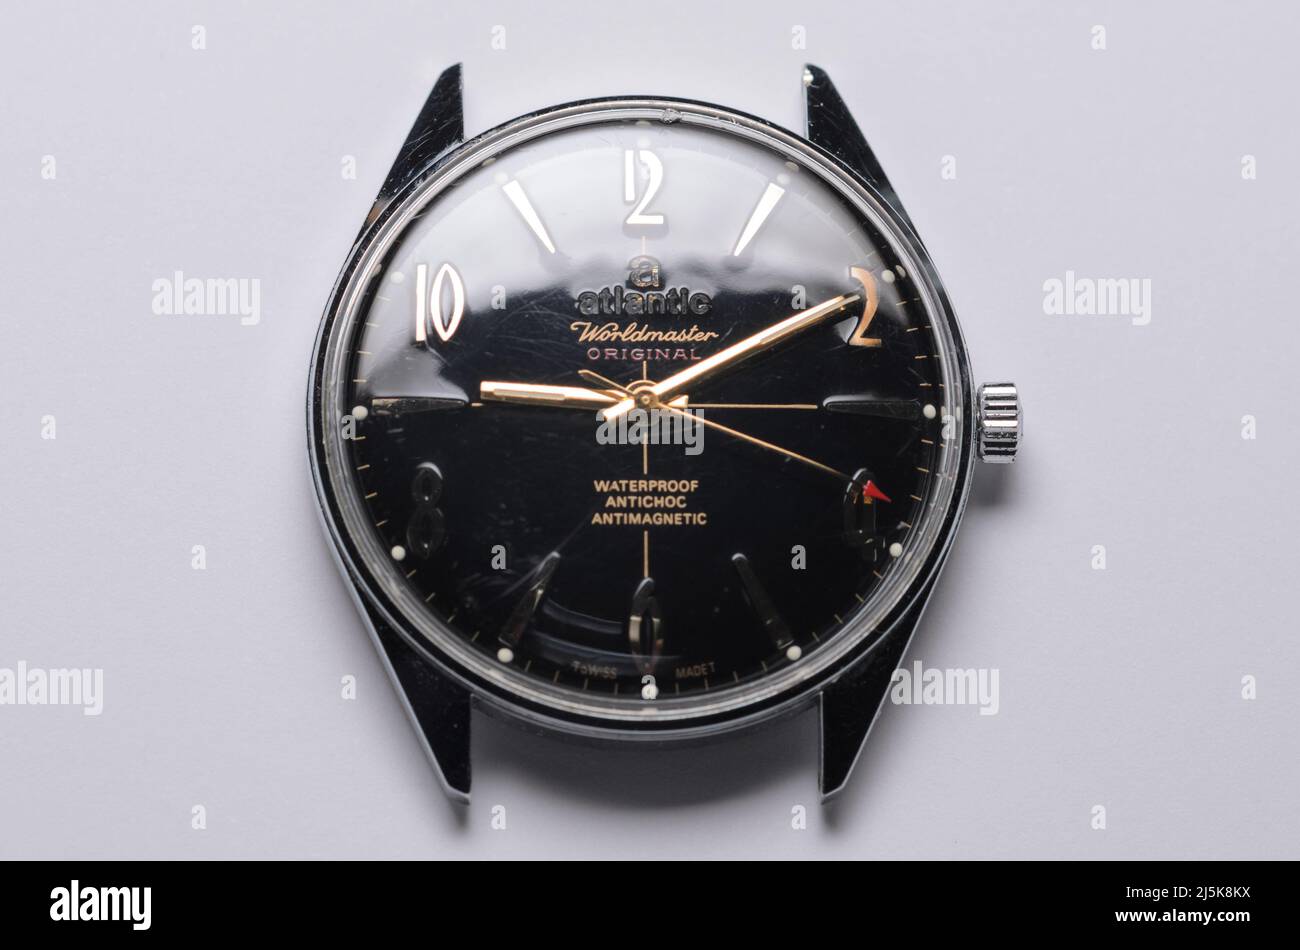 Atlantic Worldmaster Original wristwatch on white background Stock Photo -  Alamy